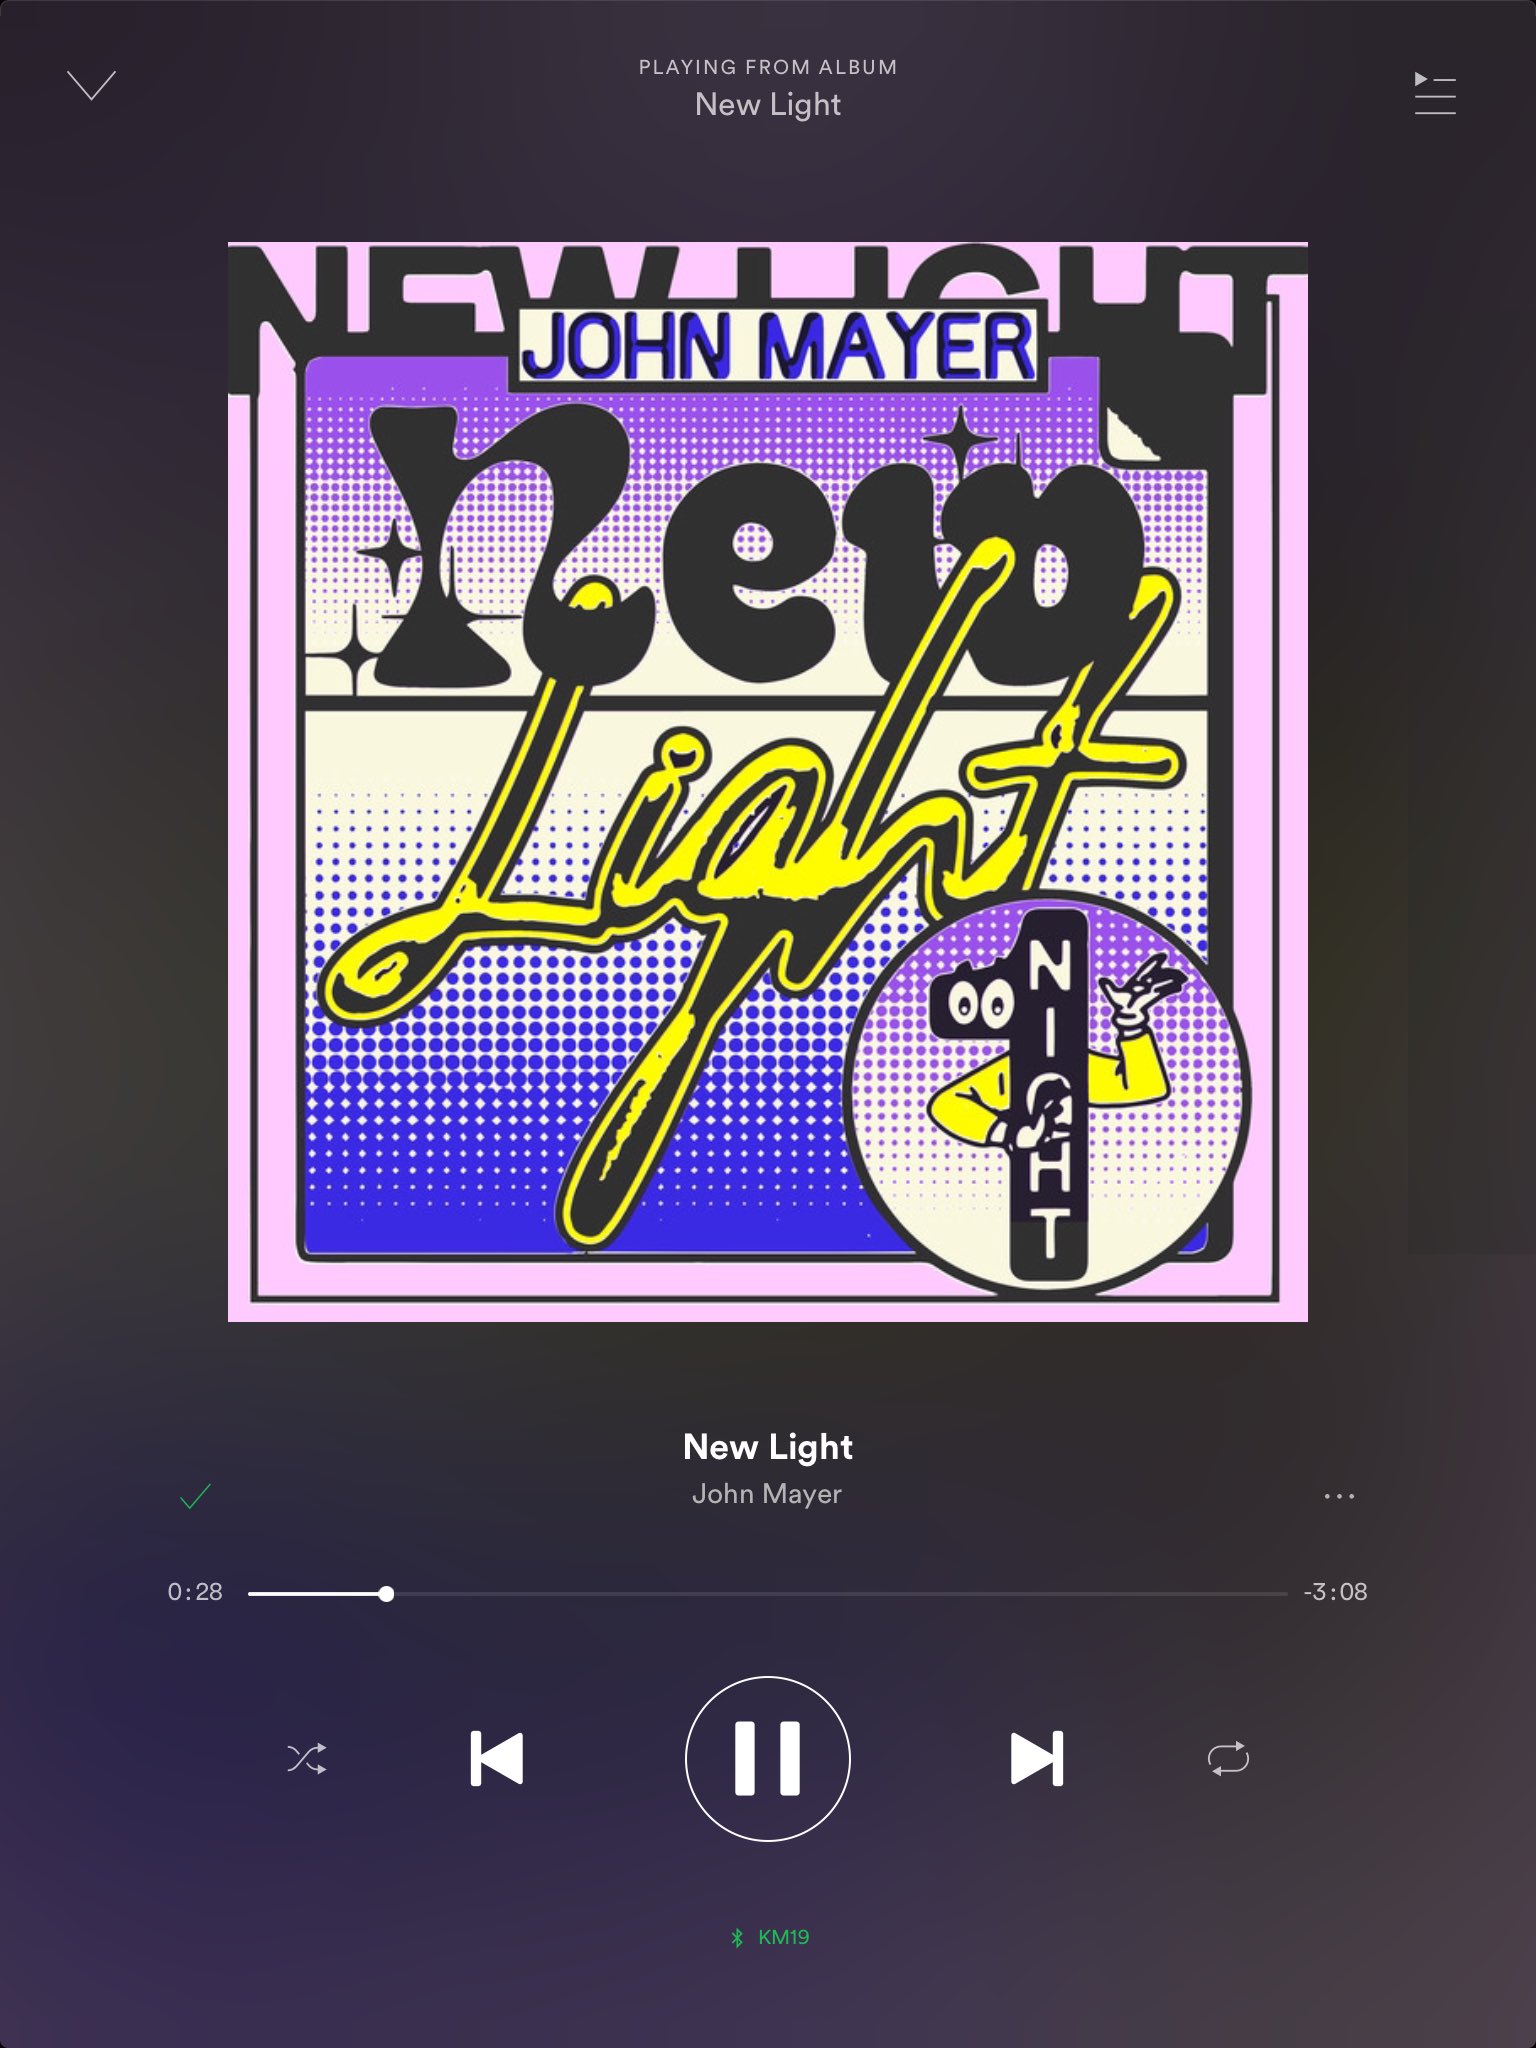 Alx Green on Twitter: "NEW JOHN MAYER!!! Loving the undertone of 80's to  this! #NewLight #johnmayer https://t.co/JPv4dePsaq" / Twitter